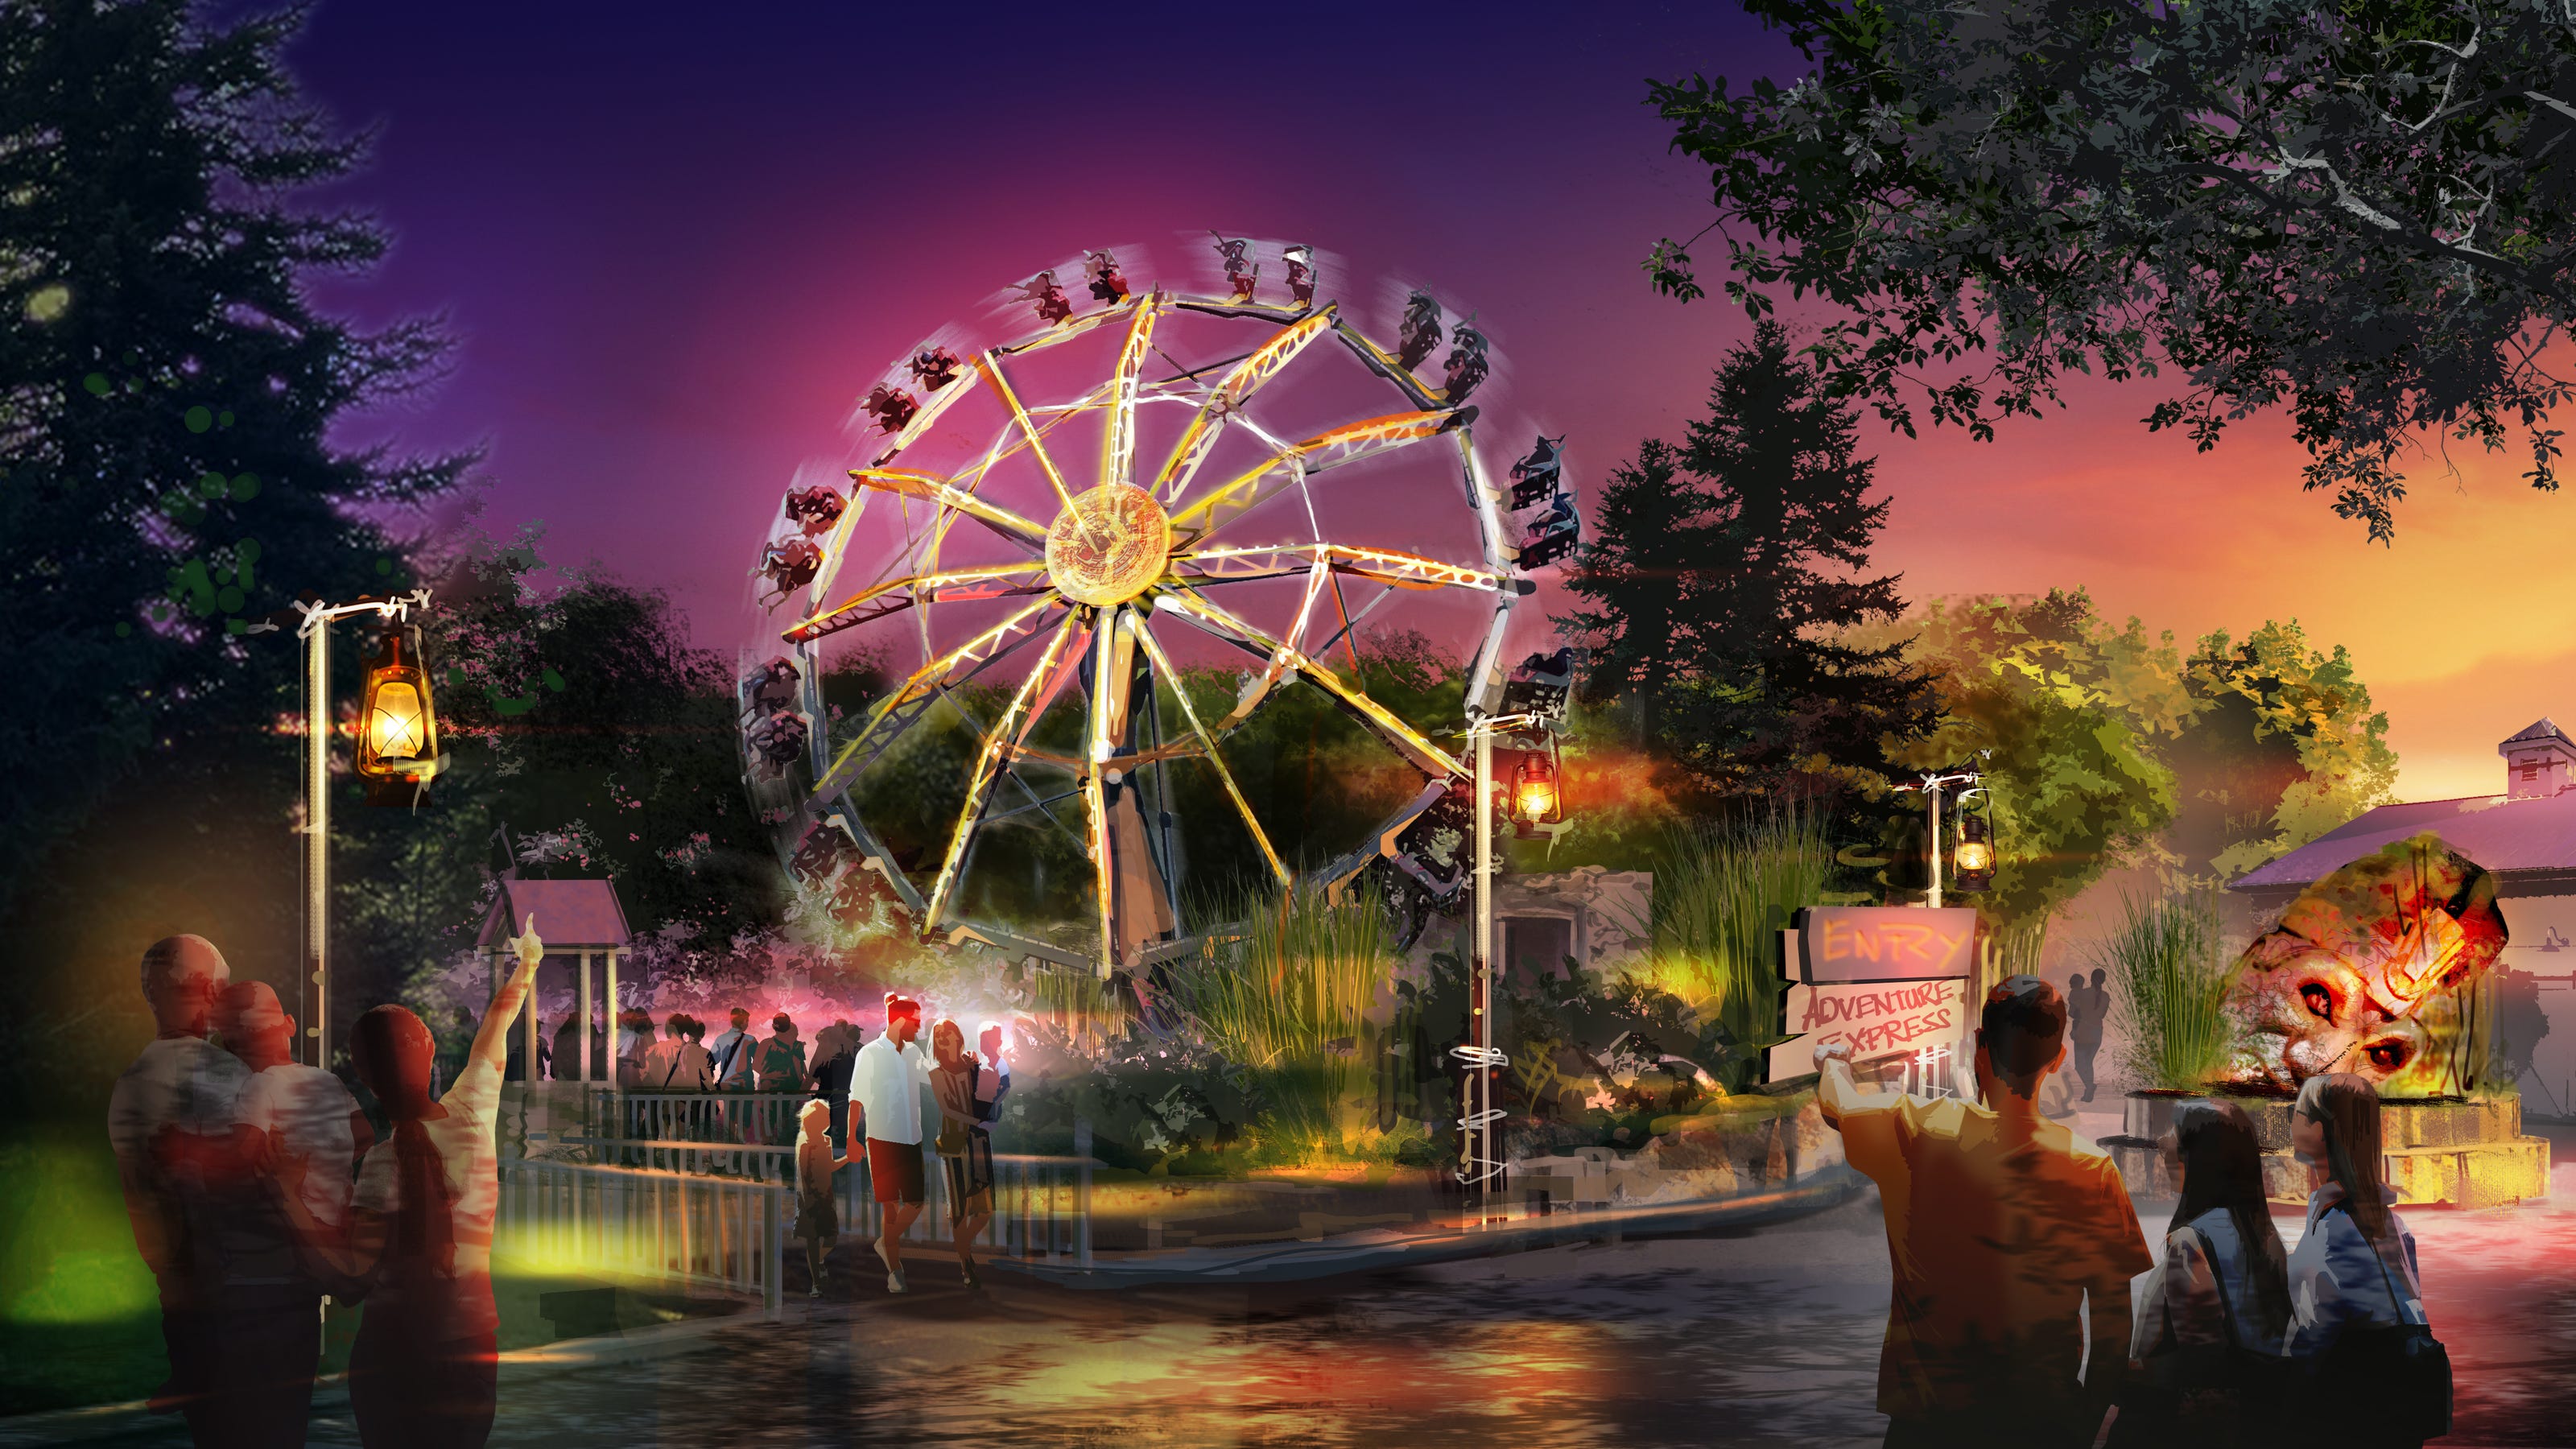 ohio-amusement-park-and-nbsp-kings-island-unveils-new-family-rides-adventure-port-more-upgrades